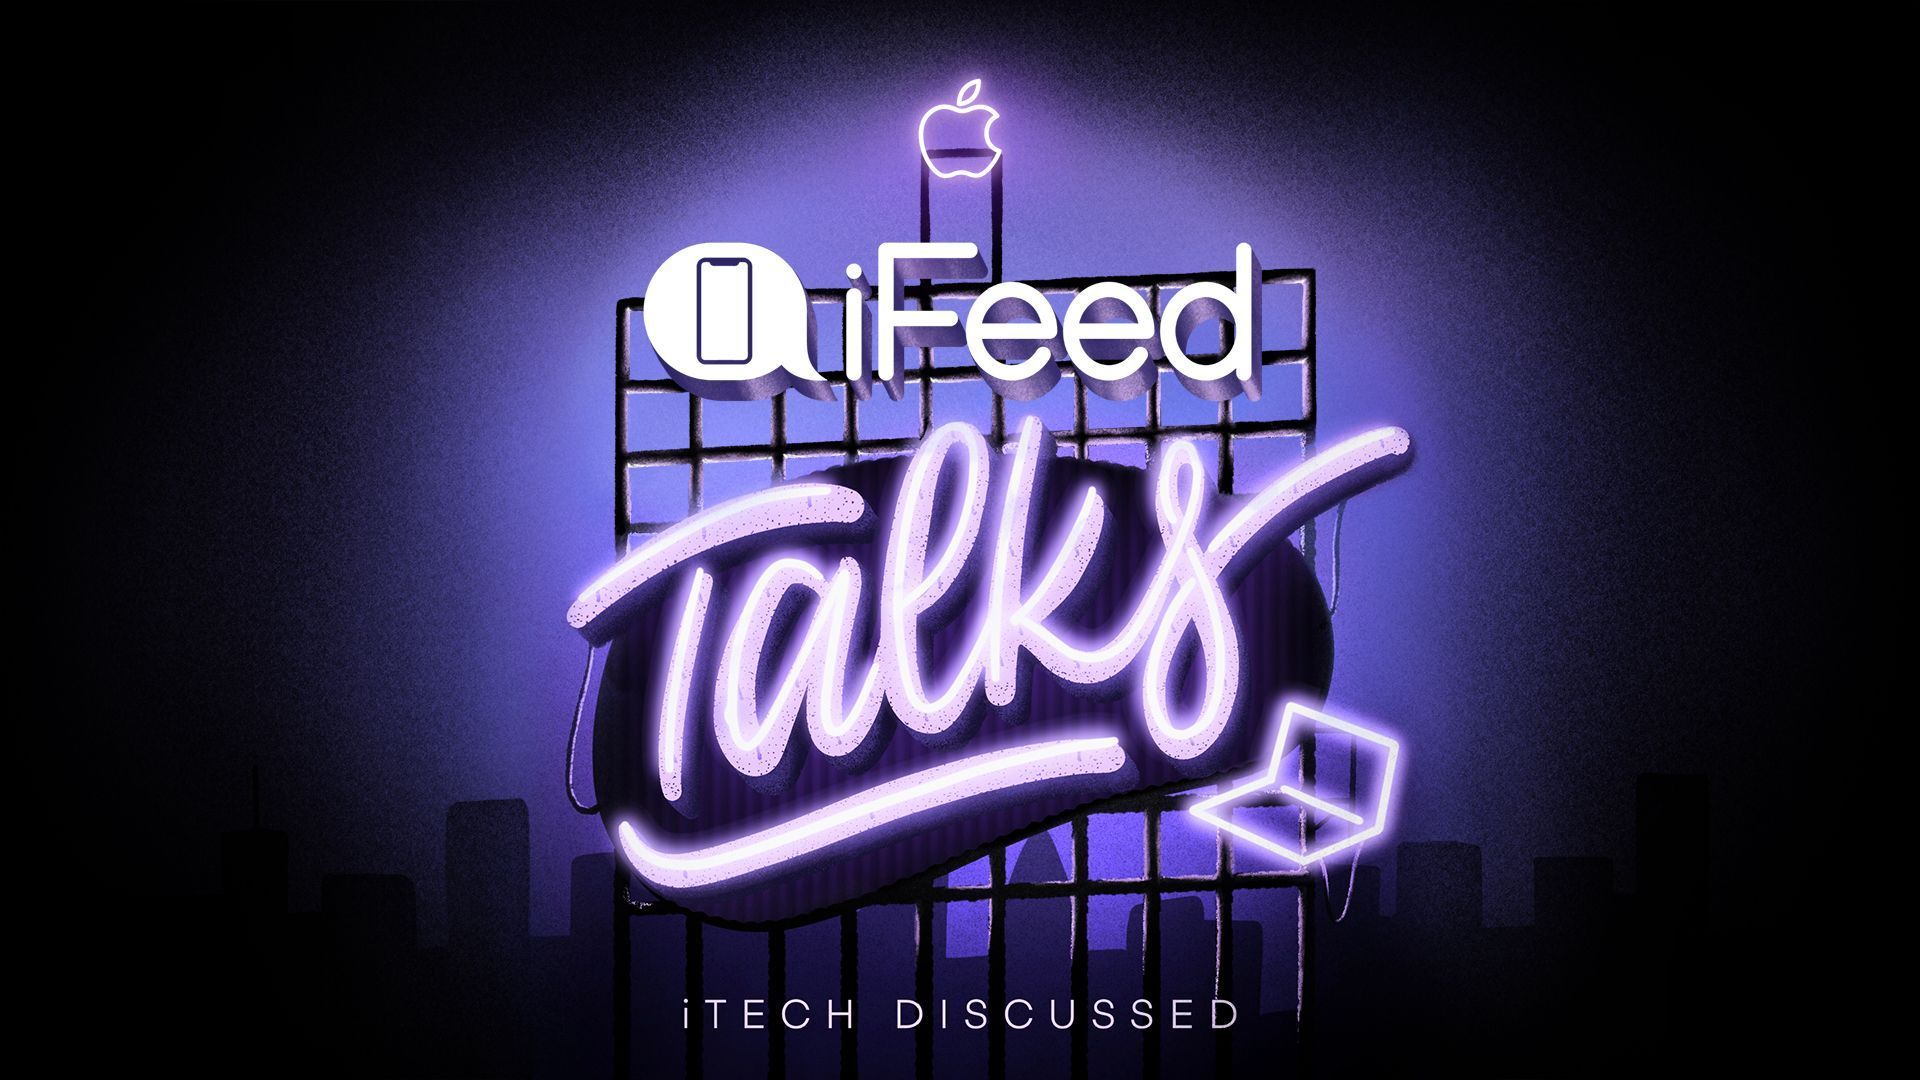 iFeed Talks - Rescaldo do evento "Peek Performance" com Filipe Espósito